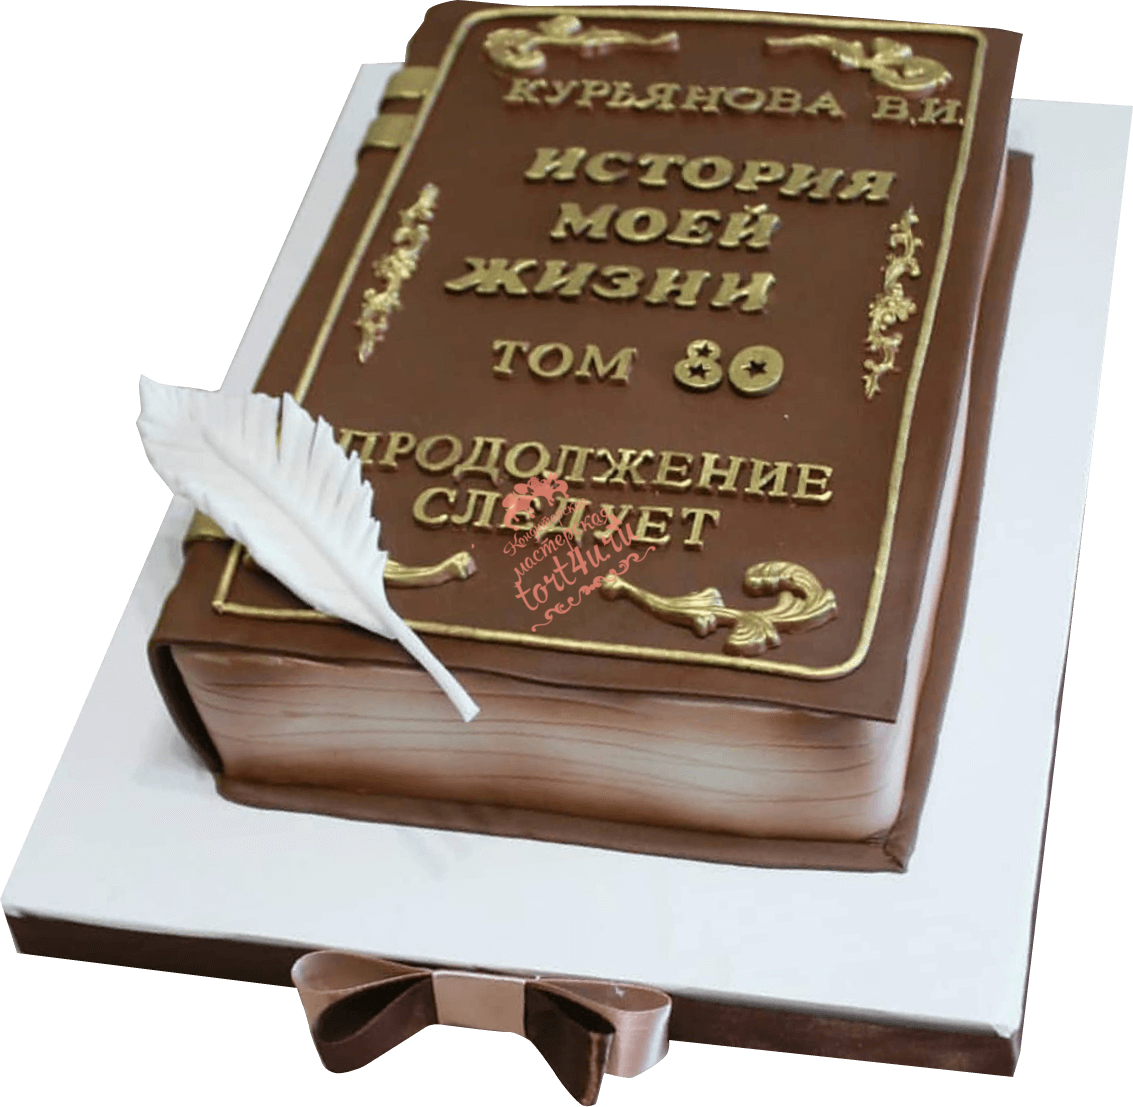 Надпись на торте мужчине 50. Торт книжка для мужчины. Торт в виде книги для мужчины. Надписи торте книгой. Надпись на торт в виде книги.